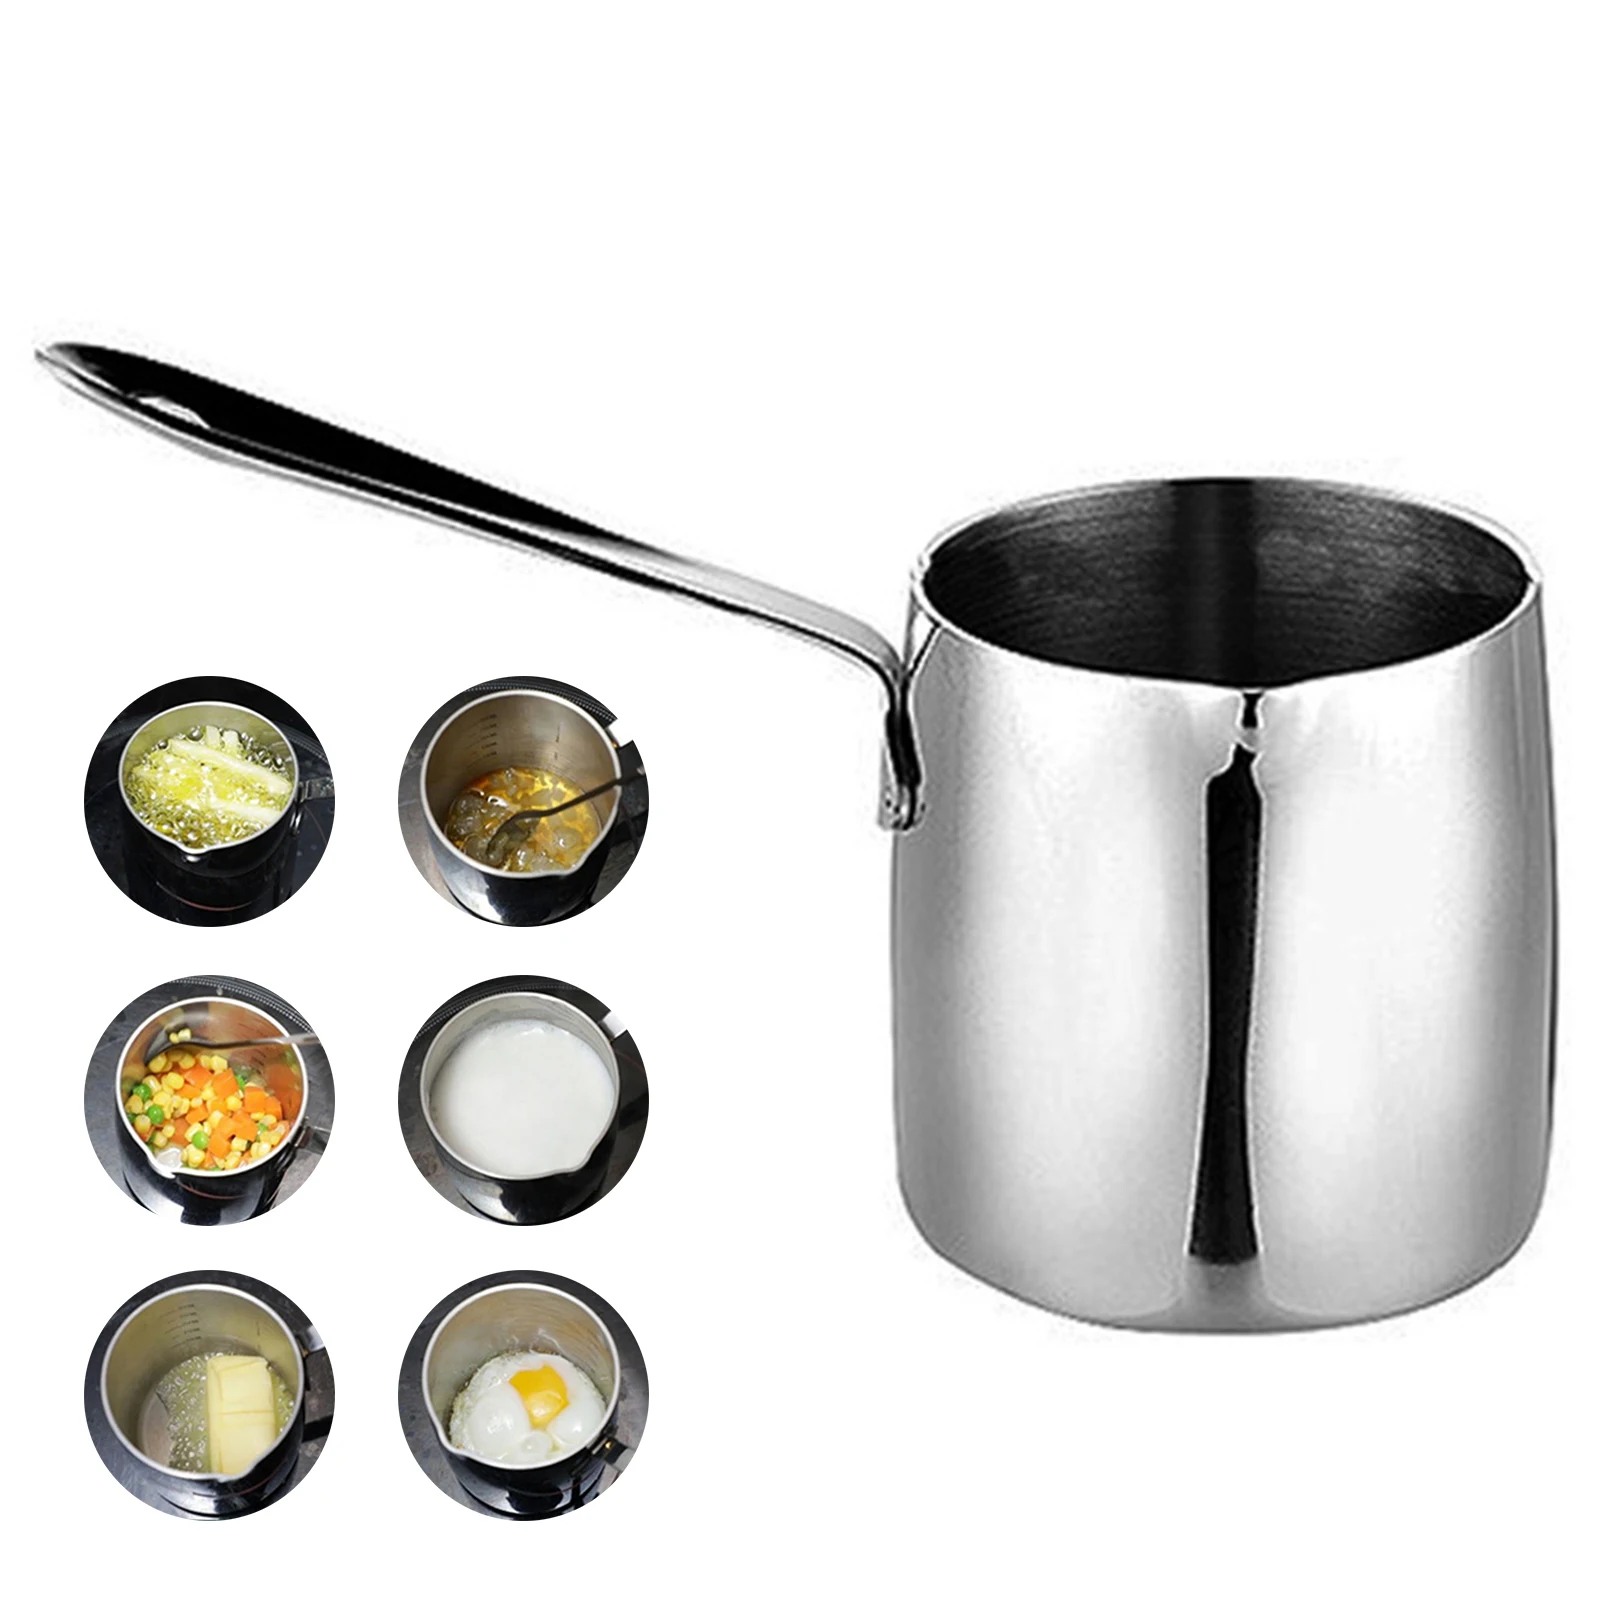 

400ml Cookware Milk Pan 304 Stainless Steel Saucepan Silver Sauce Pan With Ergonomically Shaped Handle Kitchen Utensils Gadgets